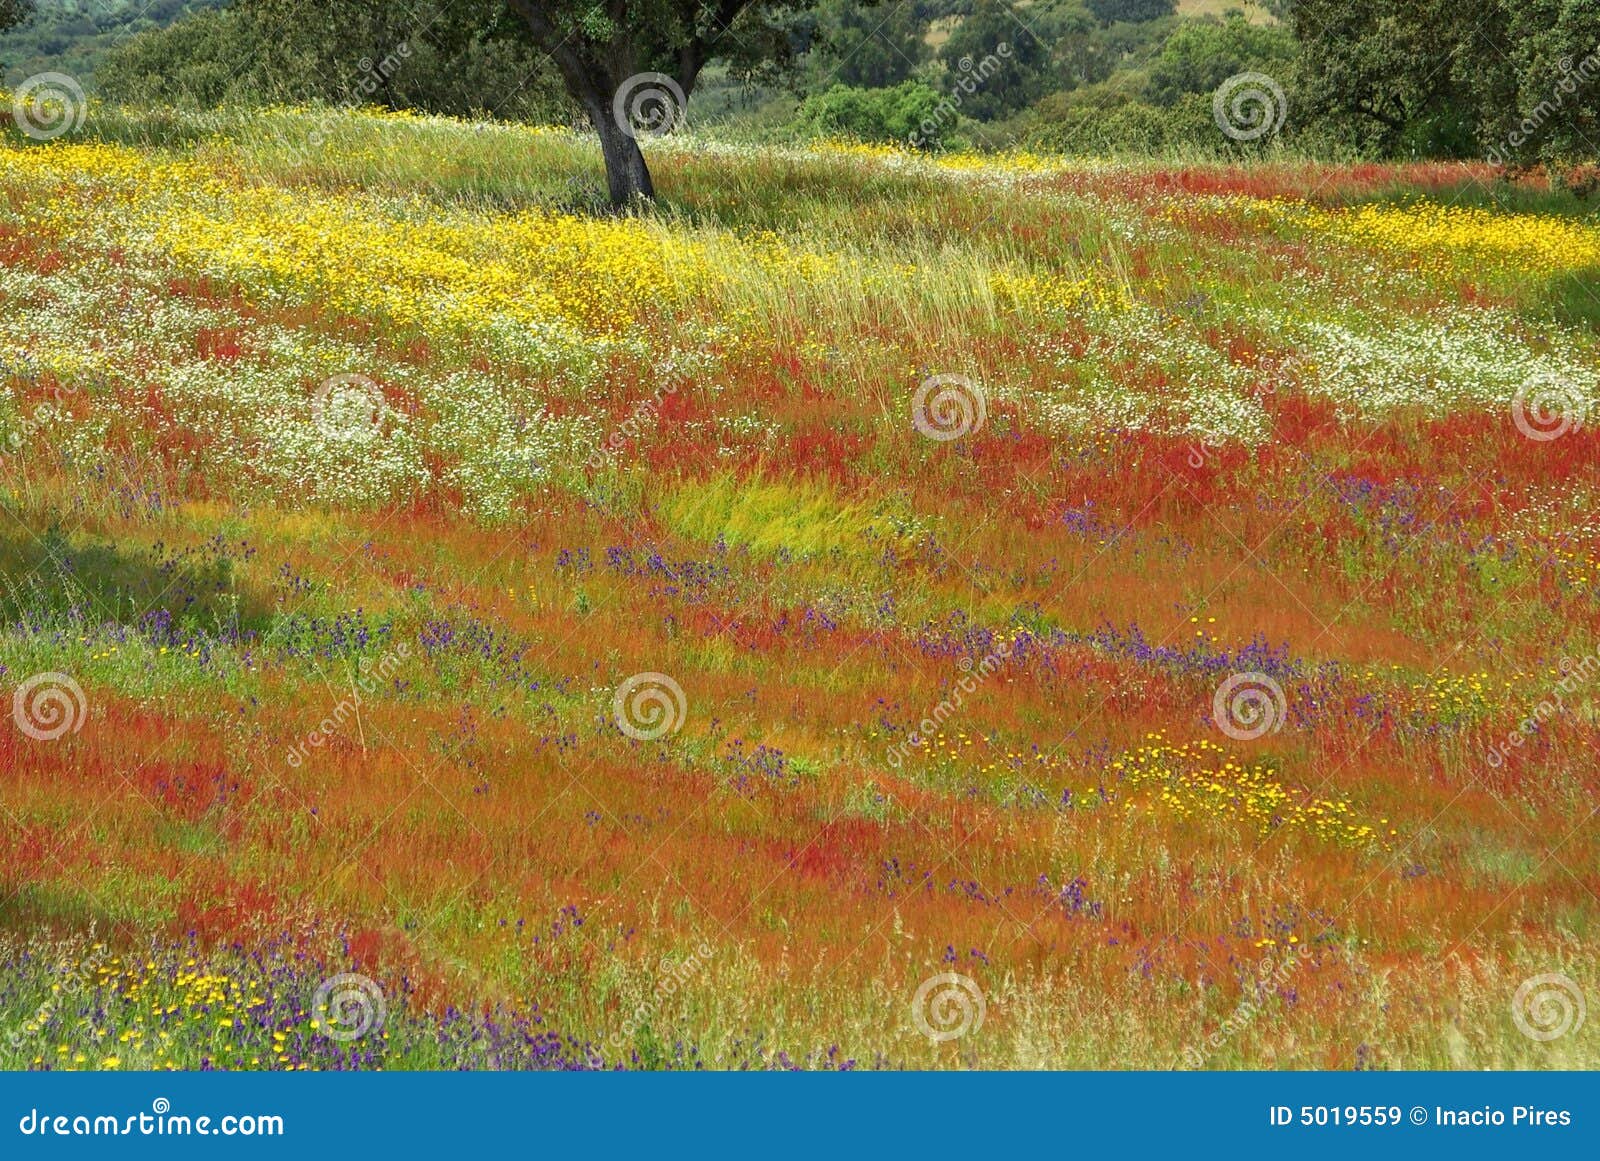 colored field in alentejo in the spring.